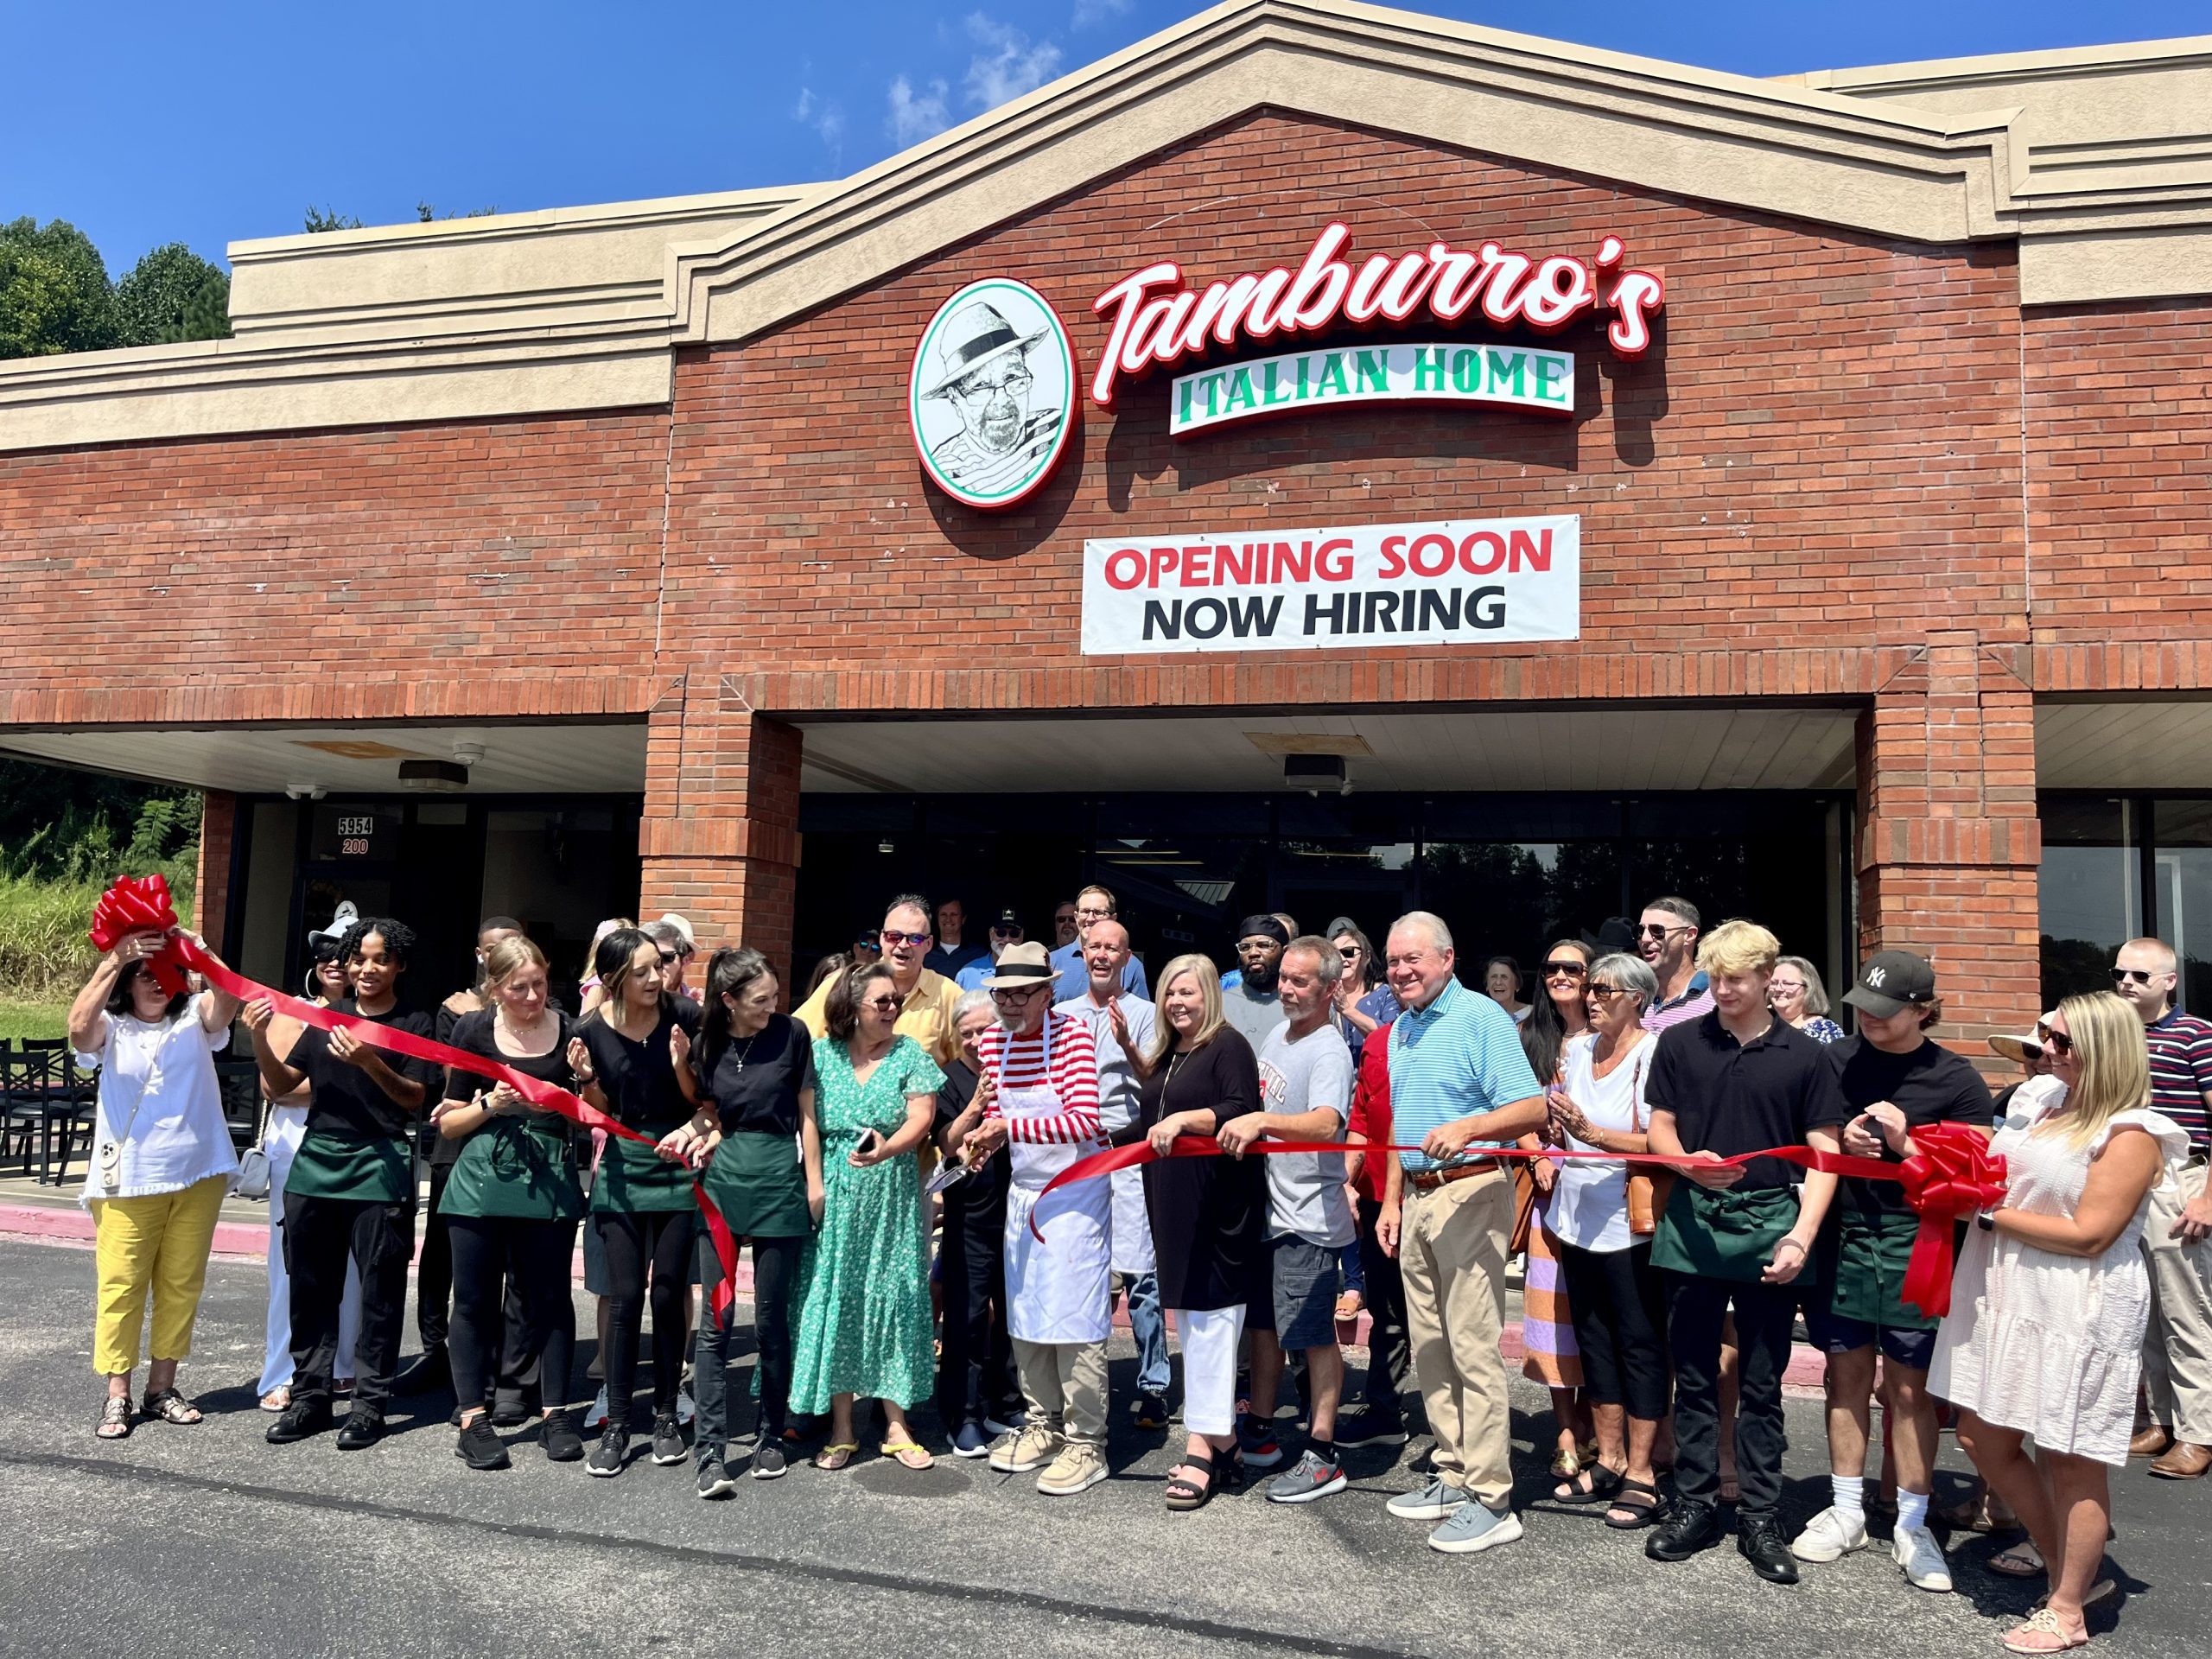 Tamburro’s Italian Home now open in Trussville